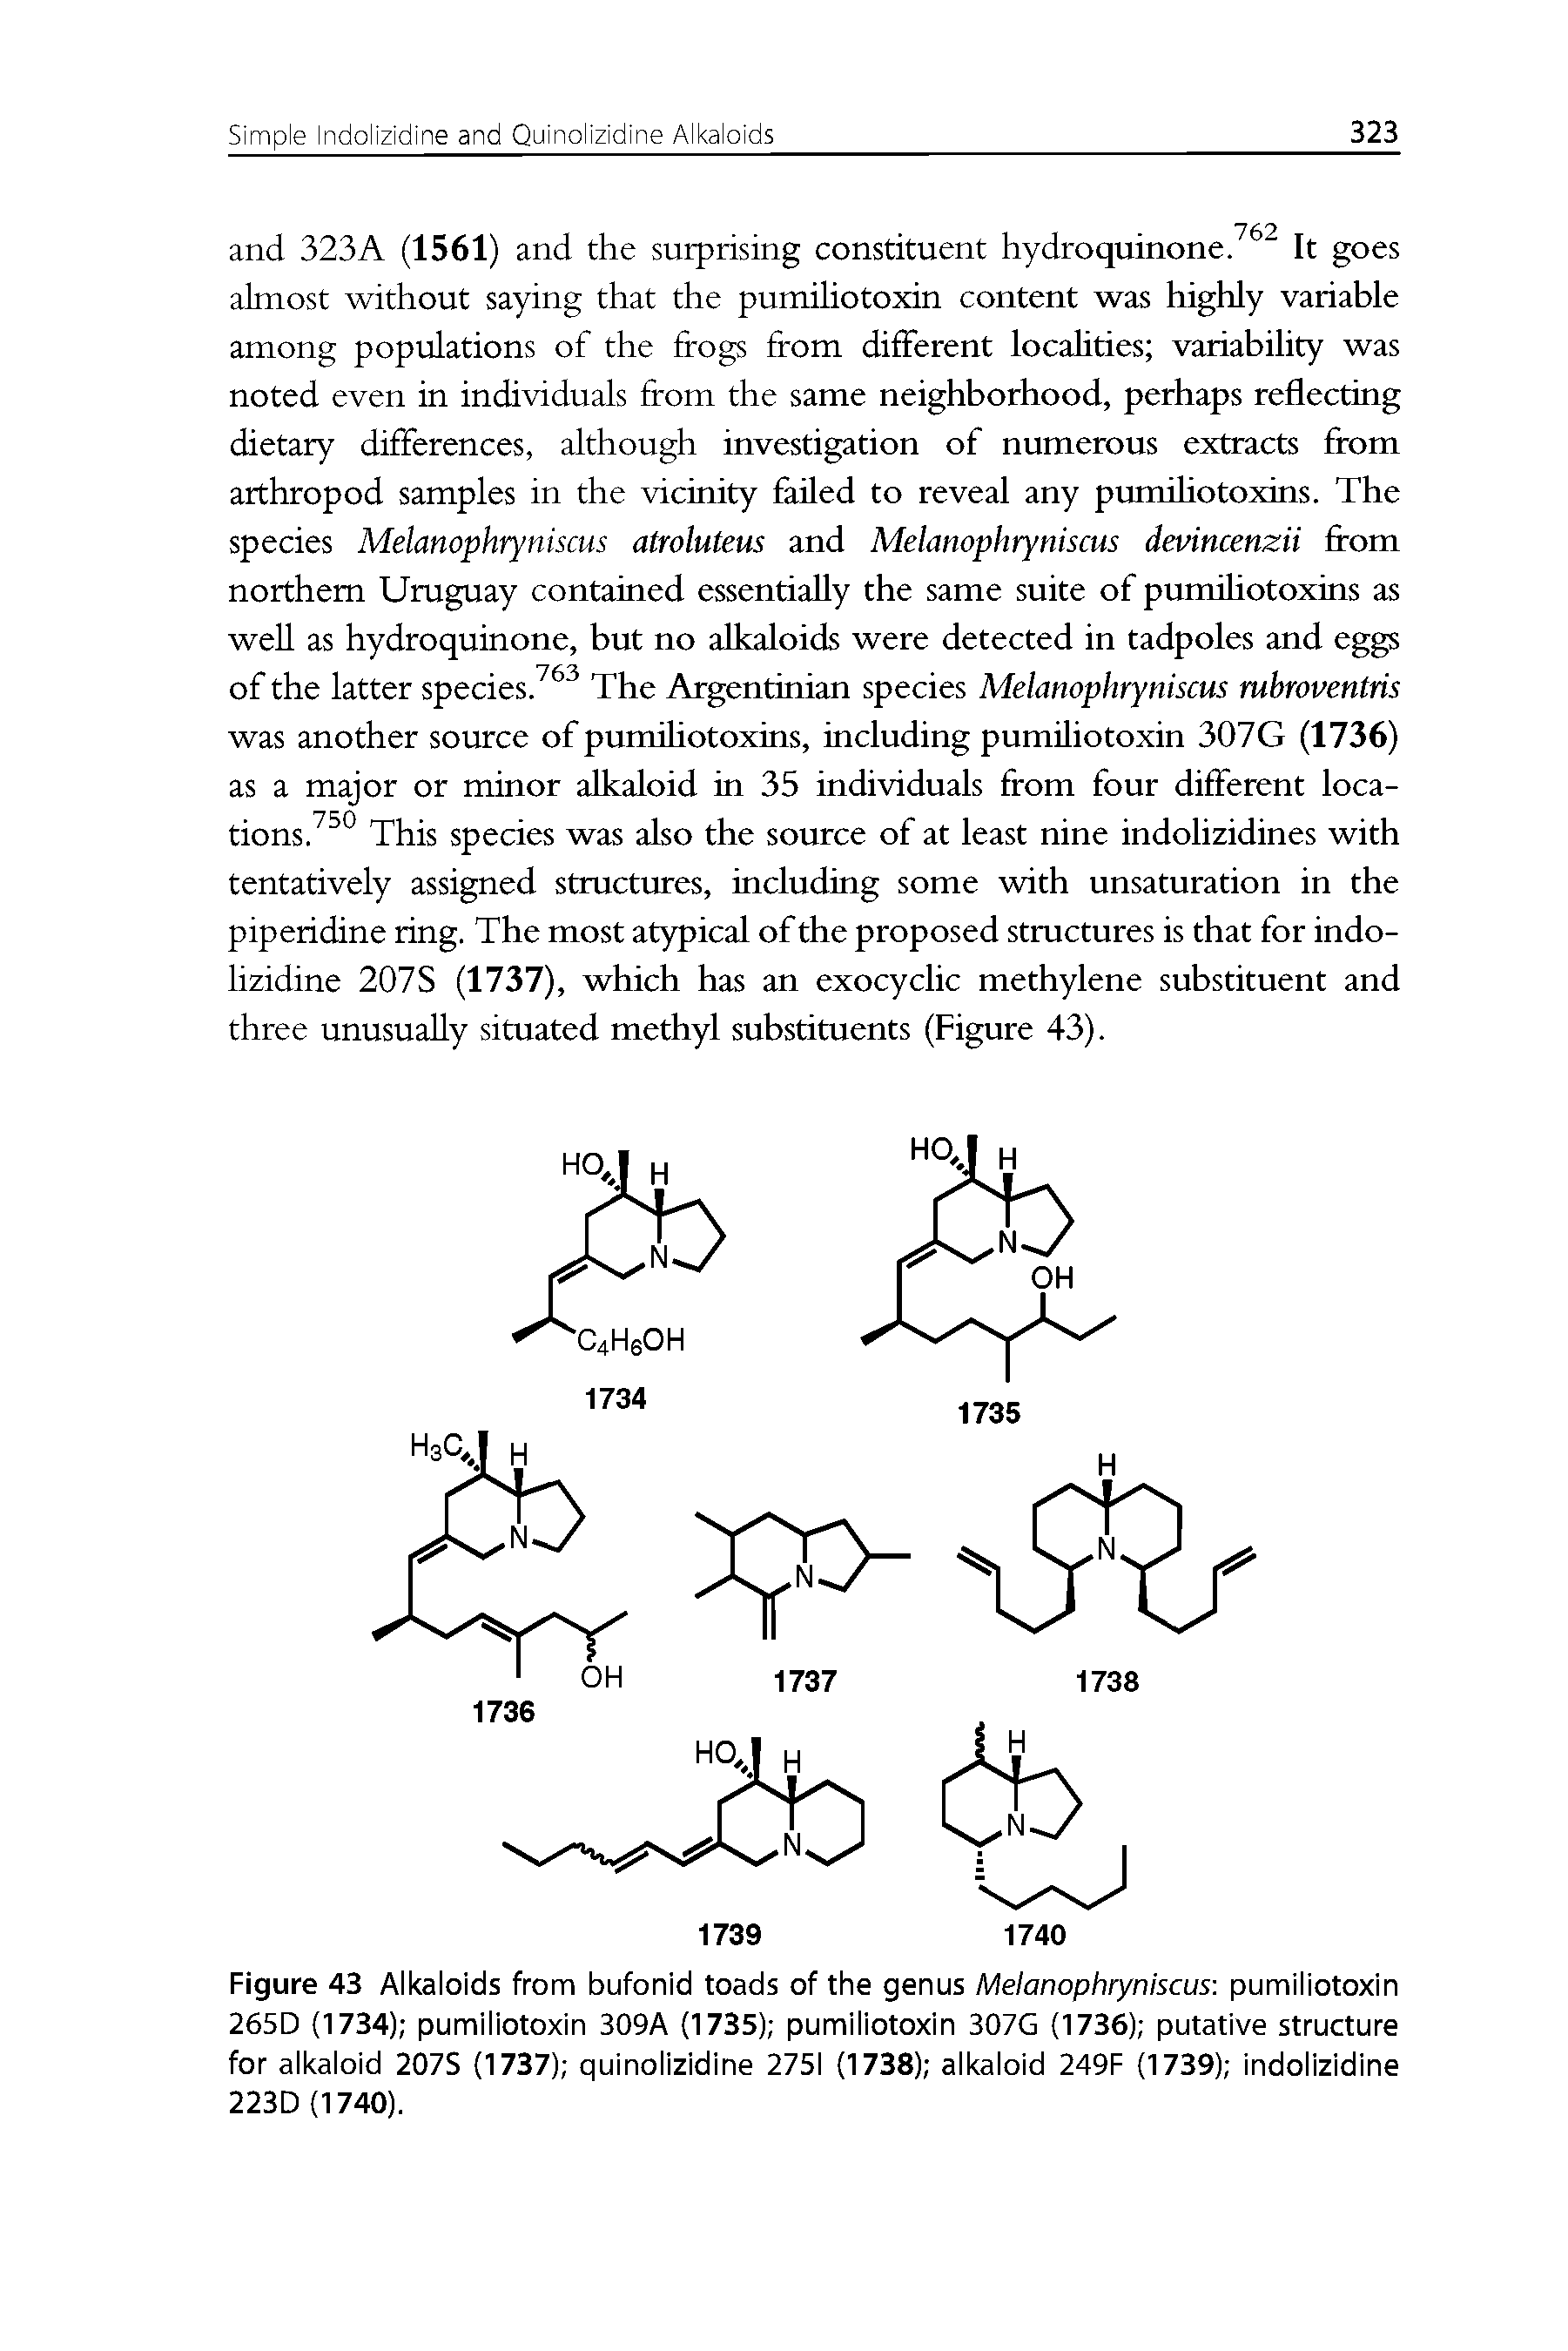 Figure 43 Alkaloids from bufonid toads of the genus Melanophryniscus pumiliotoxin 265D (1734) pumiliotoxin 309A (1735) pumiliotoxin 307G (1736) putative structure for alkaloid 207S (1737) quinolizidine 2751 (1738) alkaloid 249F (1739) indolizidine 223D (1740).